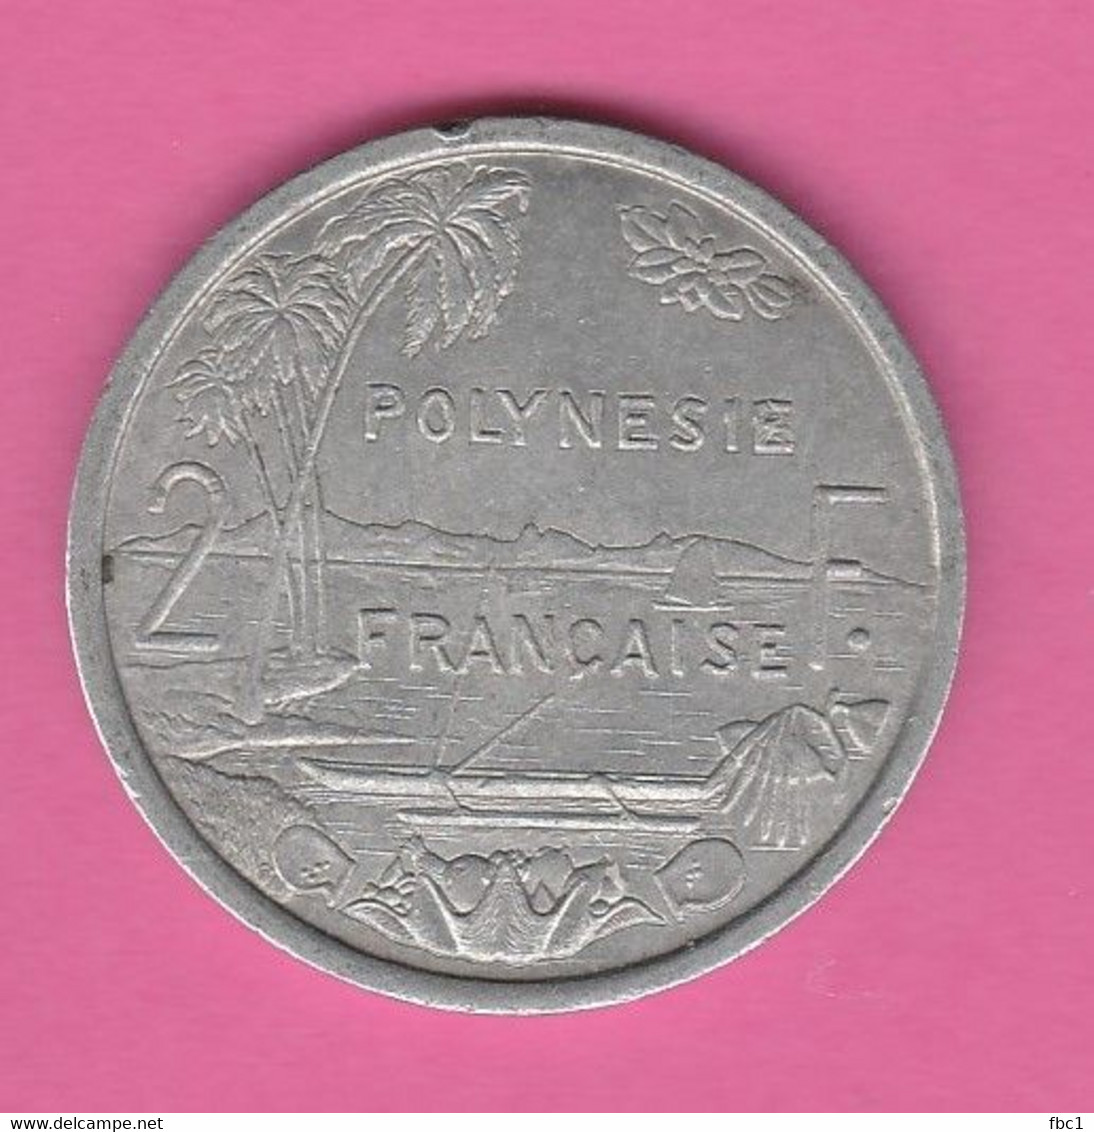 Polynésie Française - 2 Francs 1979 - Französisch-Polynesien